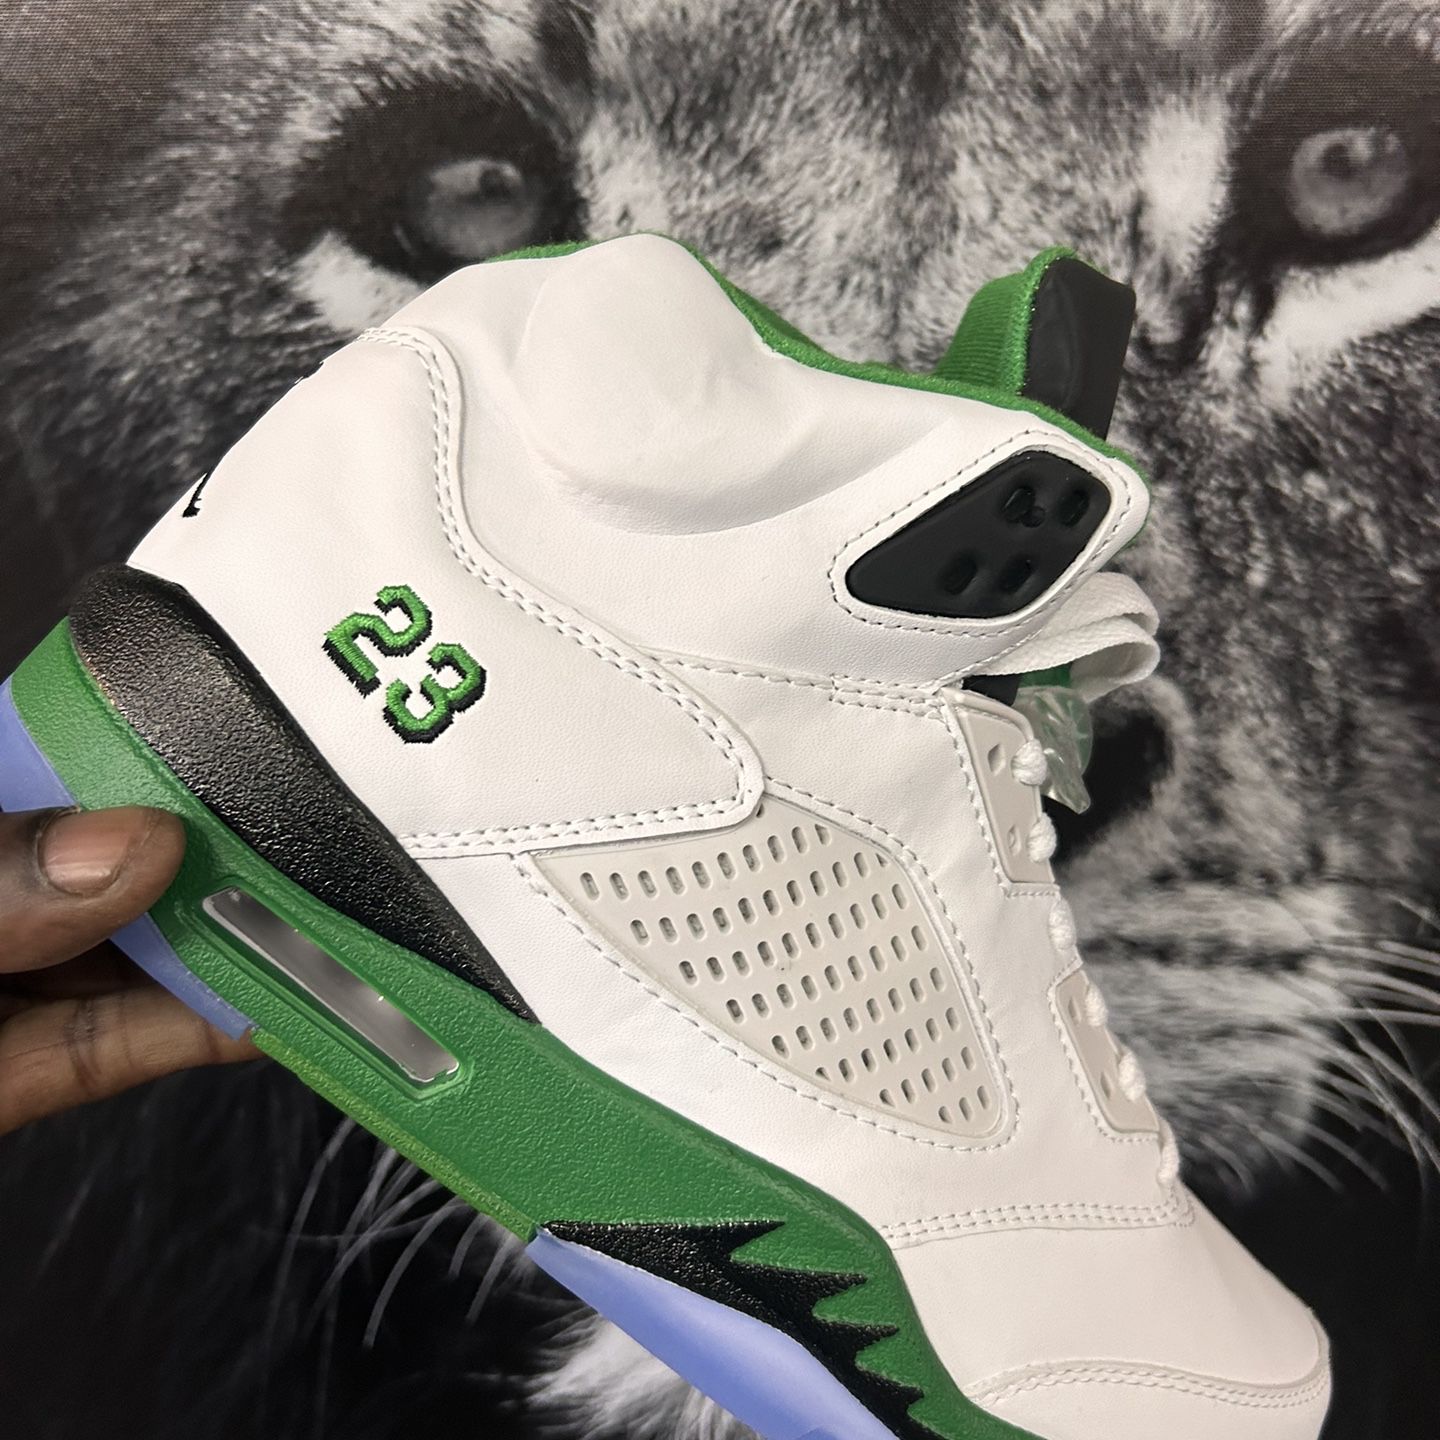 Lucky Green Jordan’s 5s